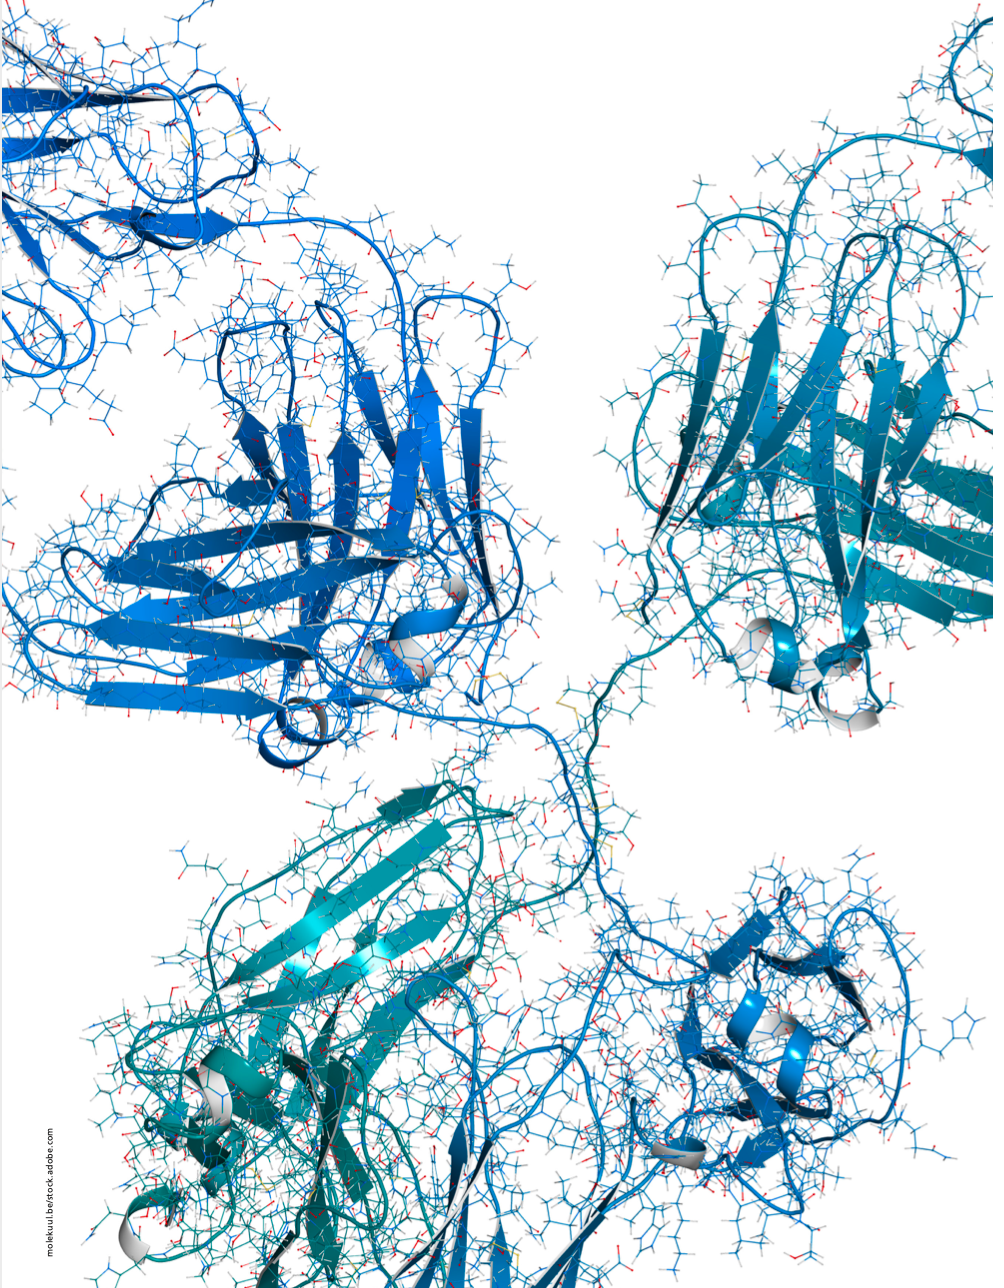 Method Robustness and Reproducibility for Monoclonal Antibody Purity Analysis